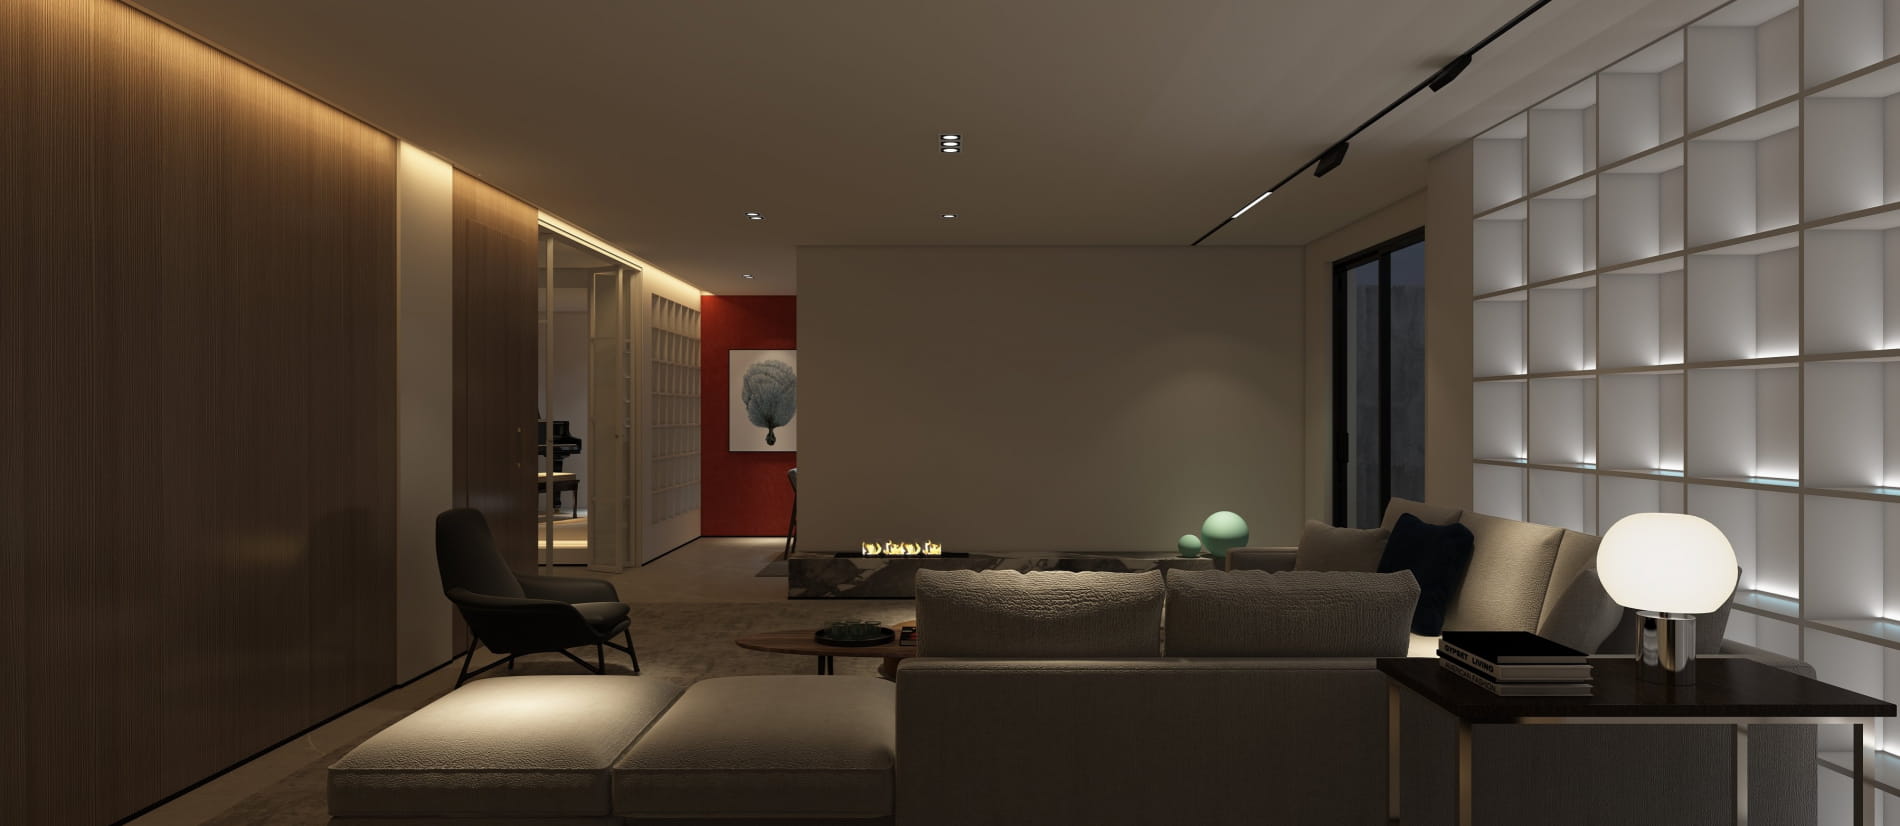 basement-interior-design